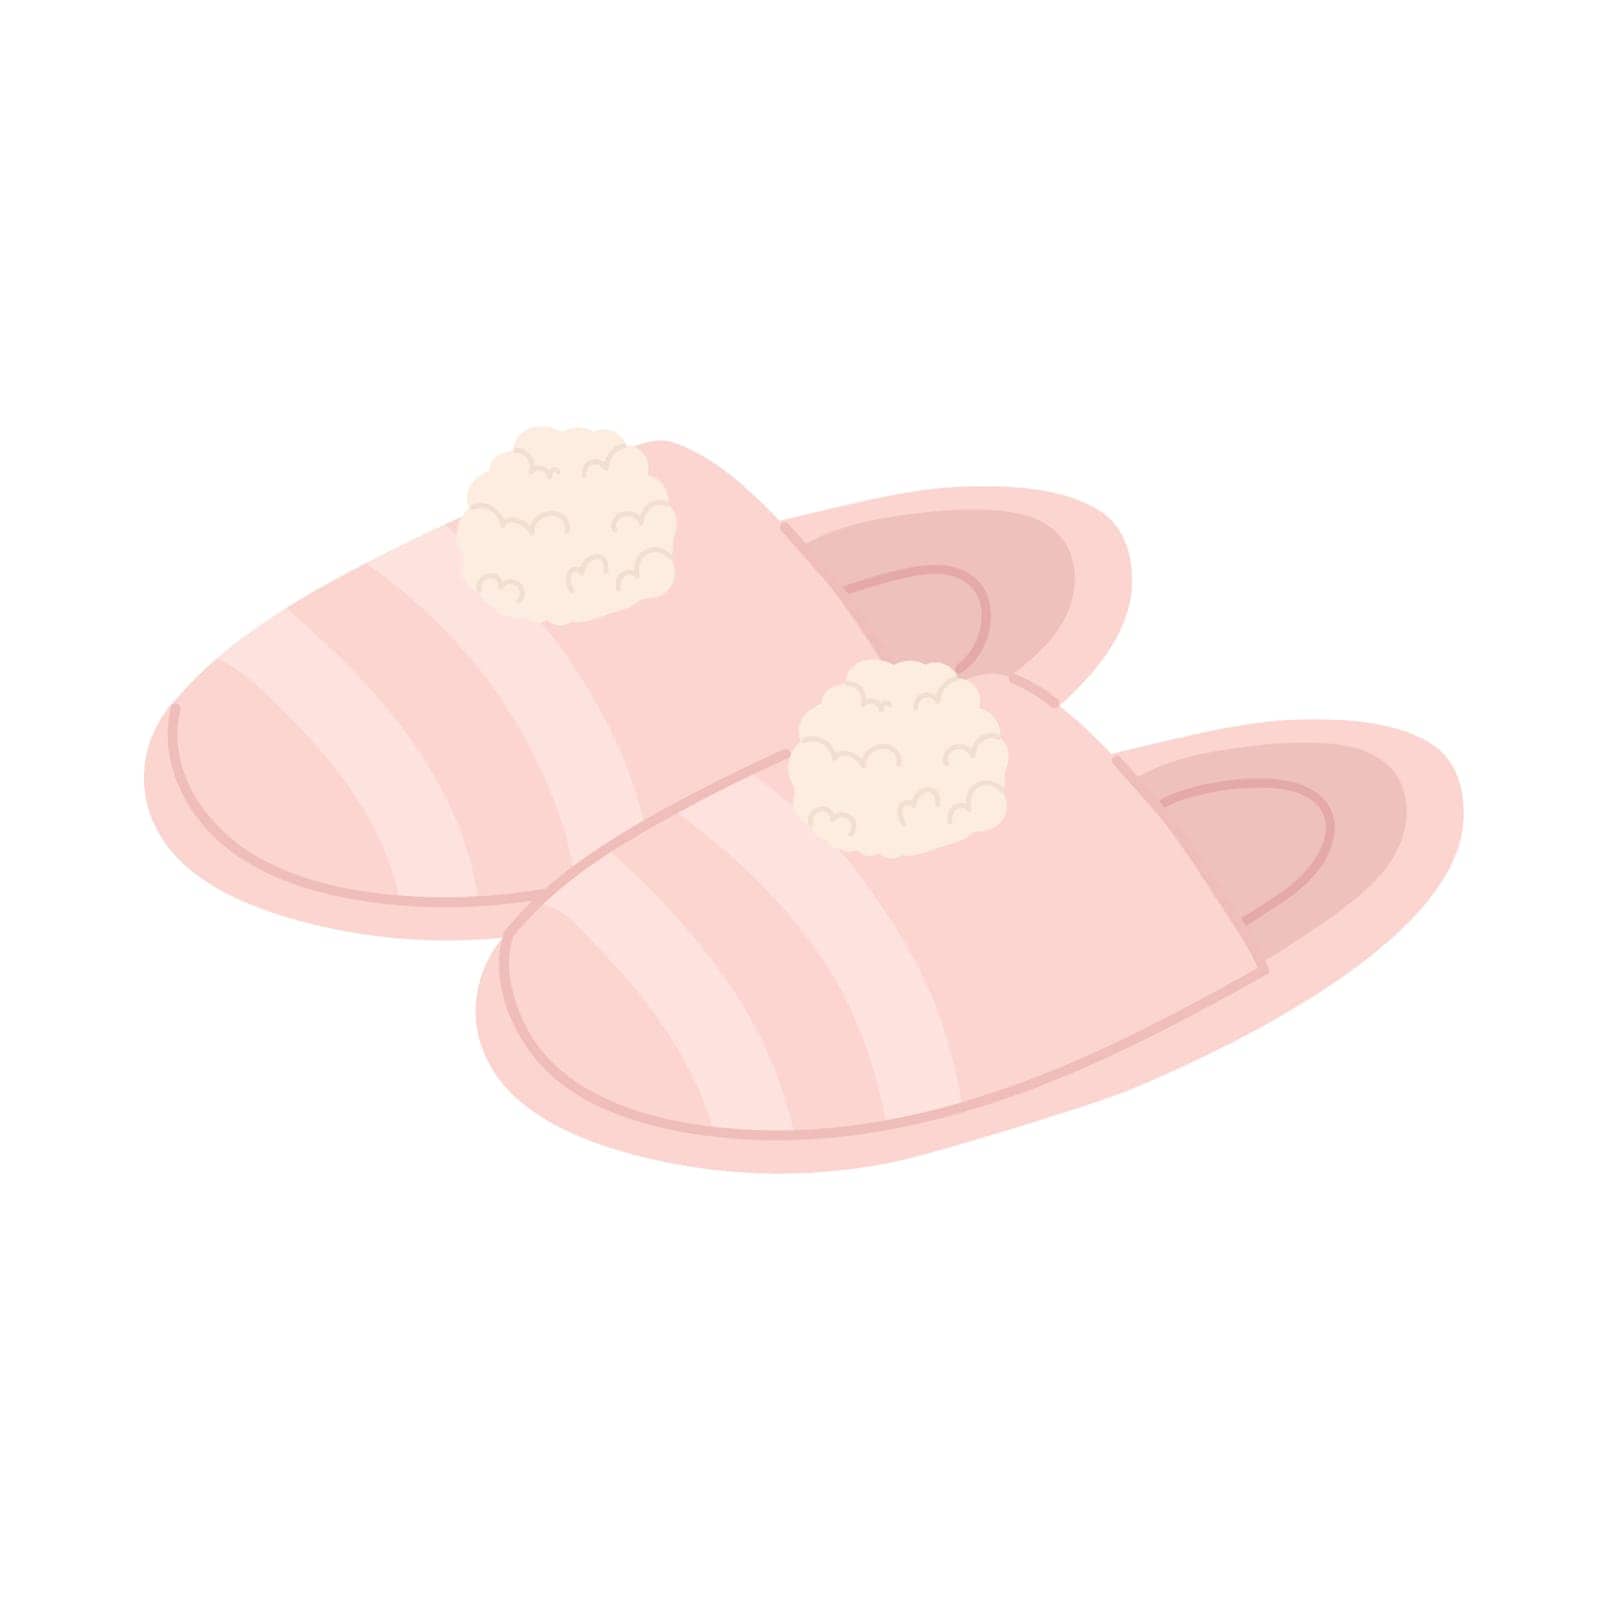 Soft house slippers. Cozy indoor slip with pompons, fluffy flip flops cartoon vector illustration